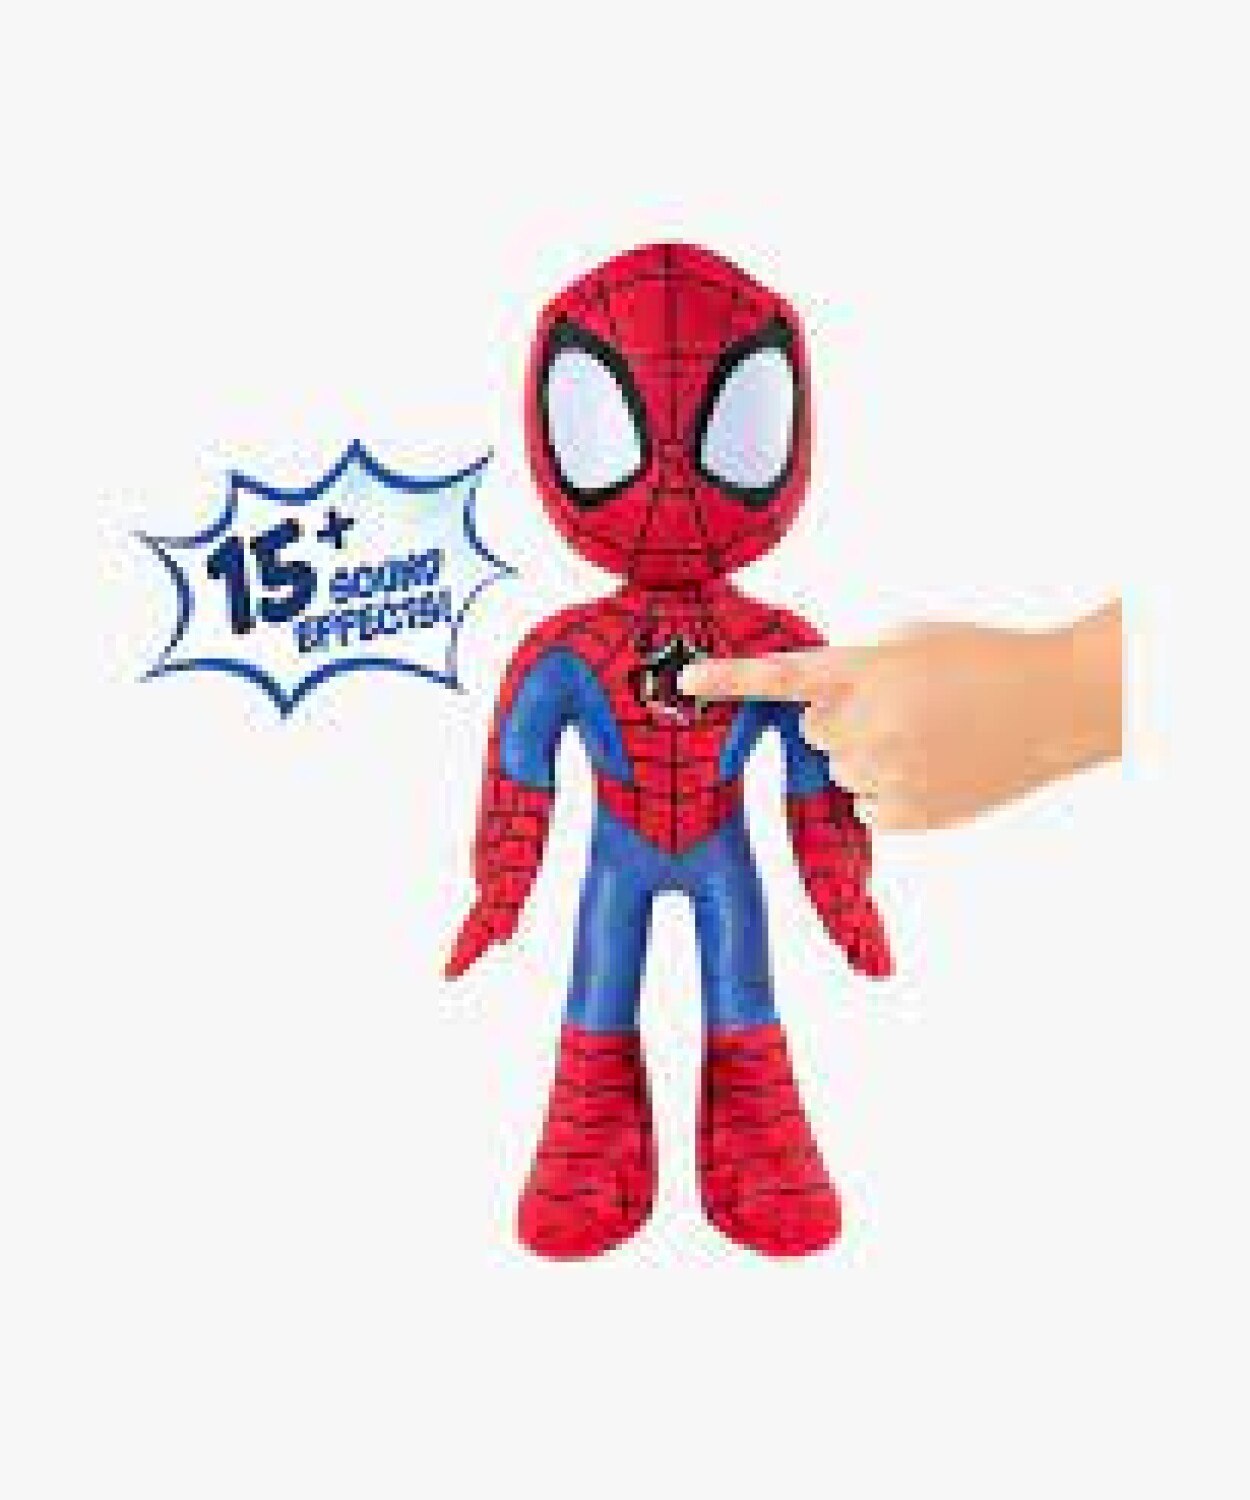 Peluche Spiderman Sentado 40 Cm - Marvel Orig. Phi Phi Toys